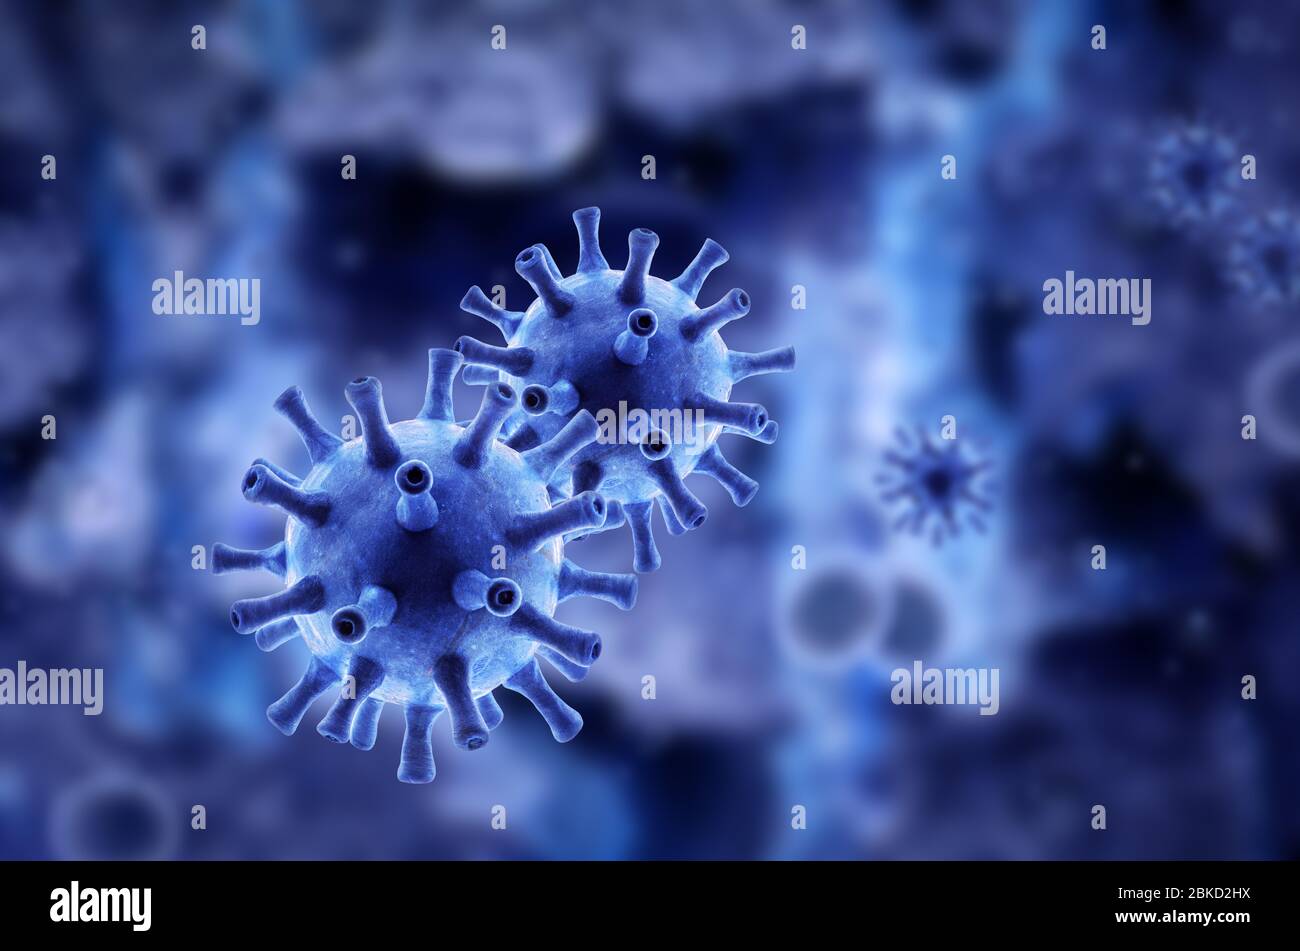 Coronavirus or flu germs inside cell, SARS-CoV-2 corona virus under microscope on blue background, 3d rendering. Concept of COVID-19 coronavirus pande Stock Photo